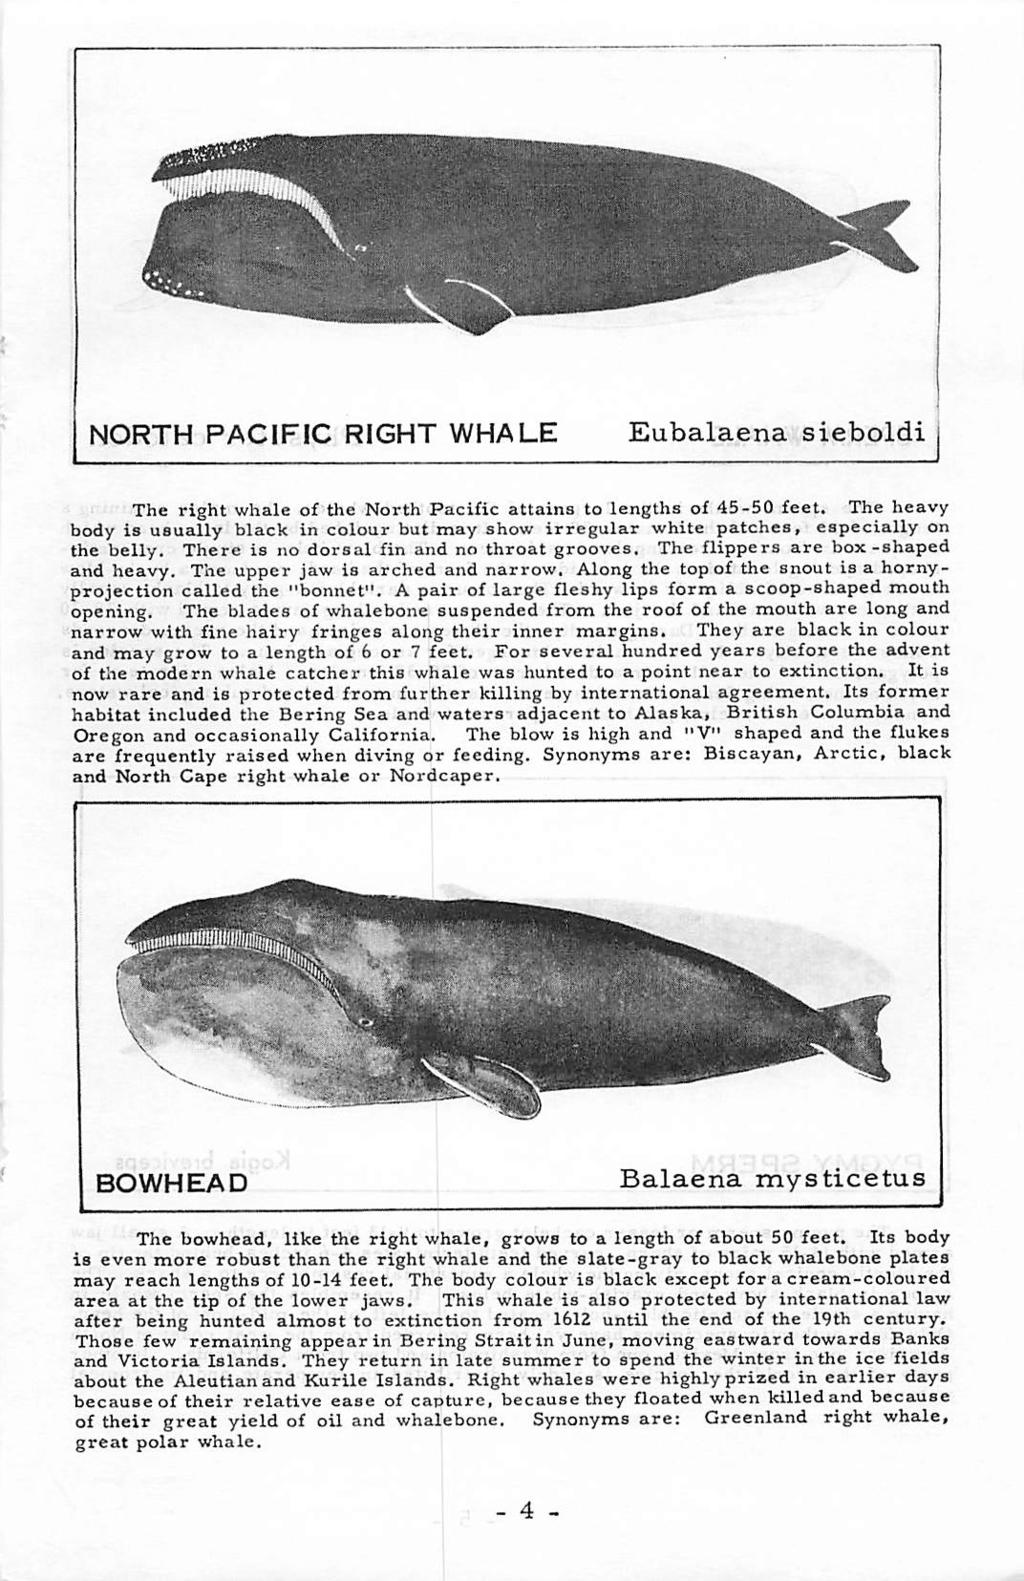 NORTH PACIFIC RIGHT WHALE Eubalaena sieboldi The right whale of the North Pacific attains to lengths of 45-50 feet.